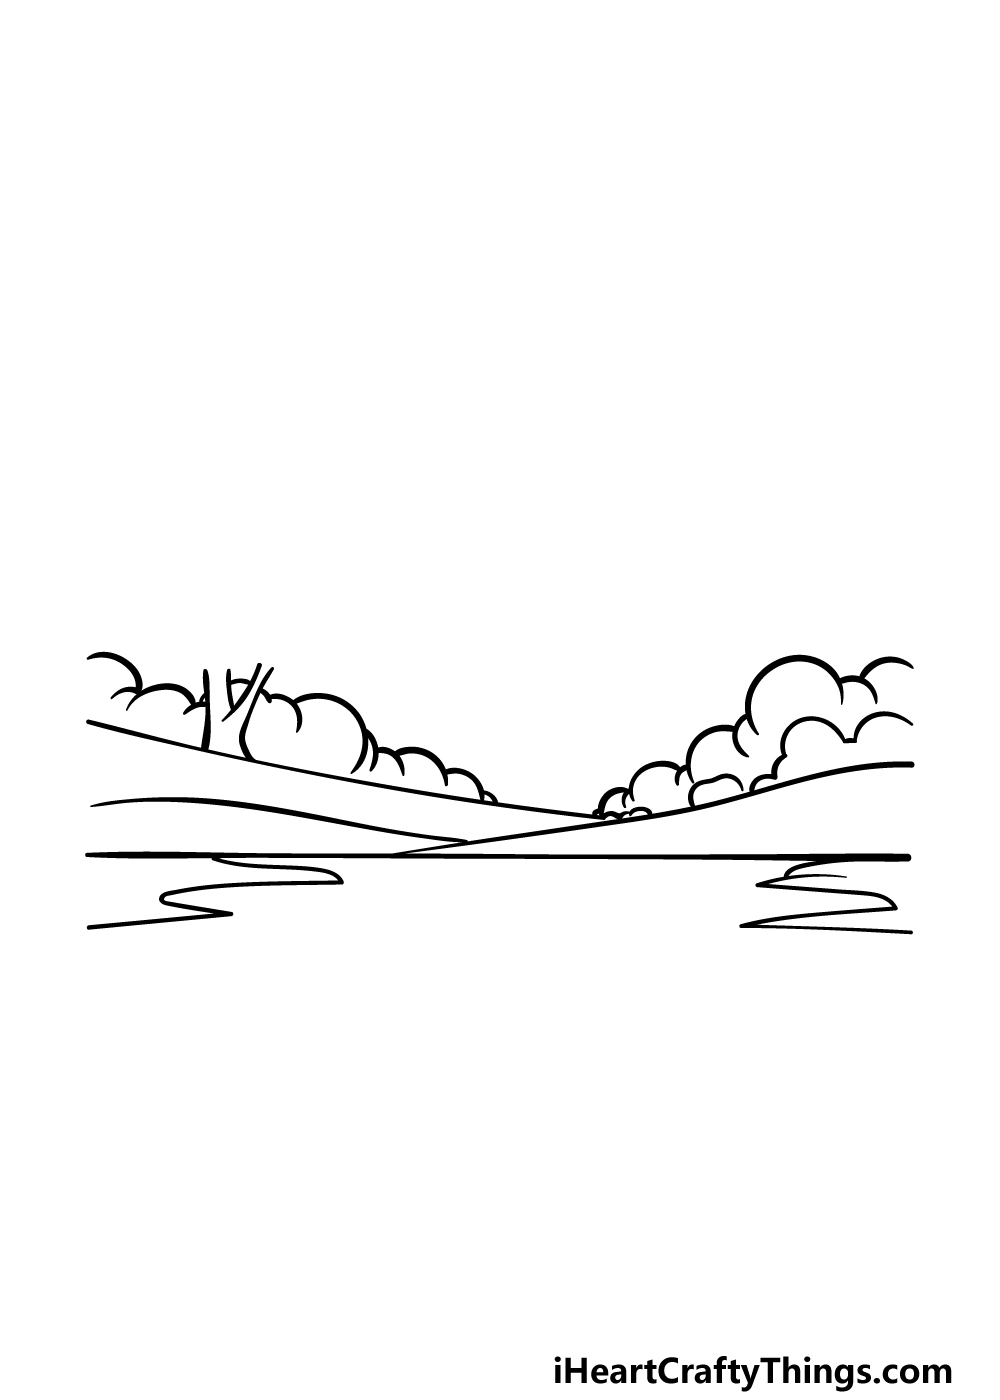 Some landscape sketches with a felt tip marker : r/sketches